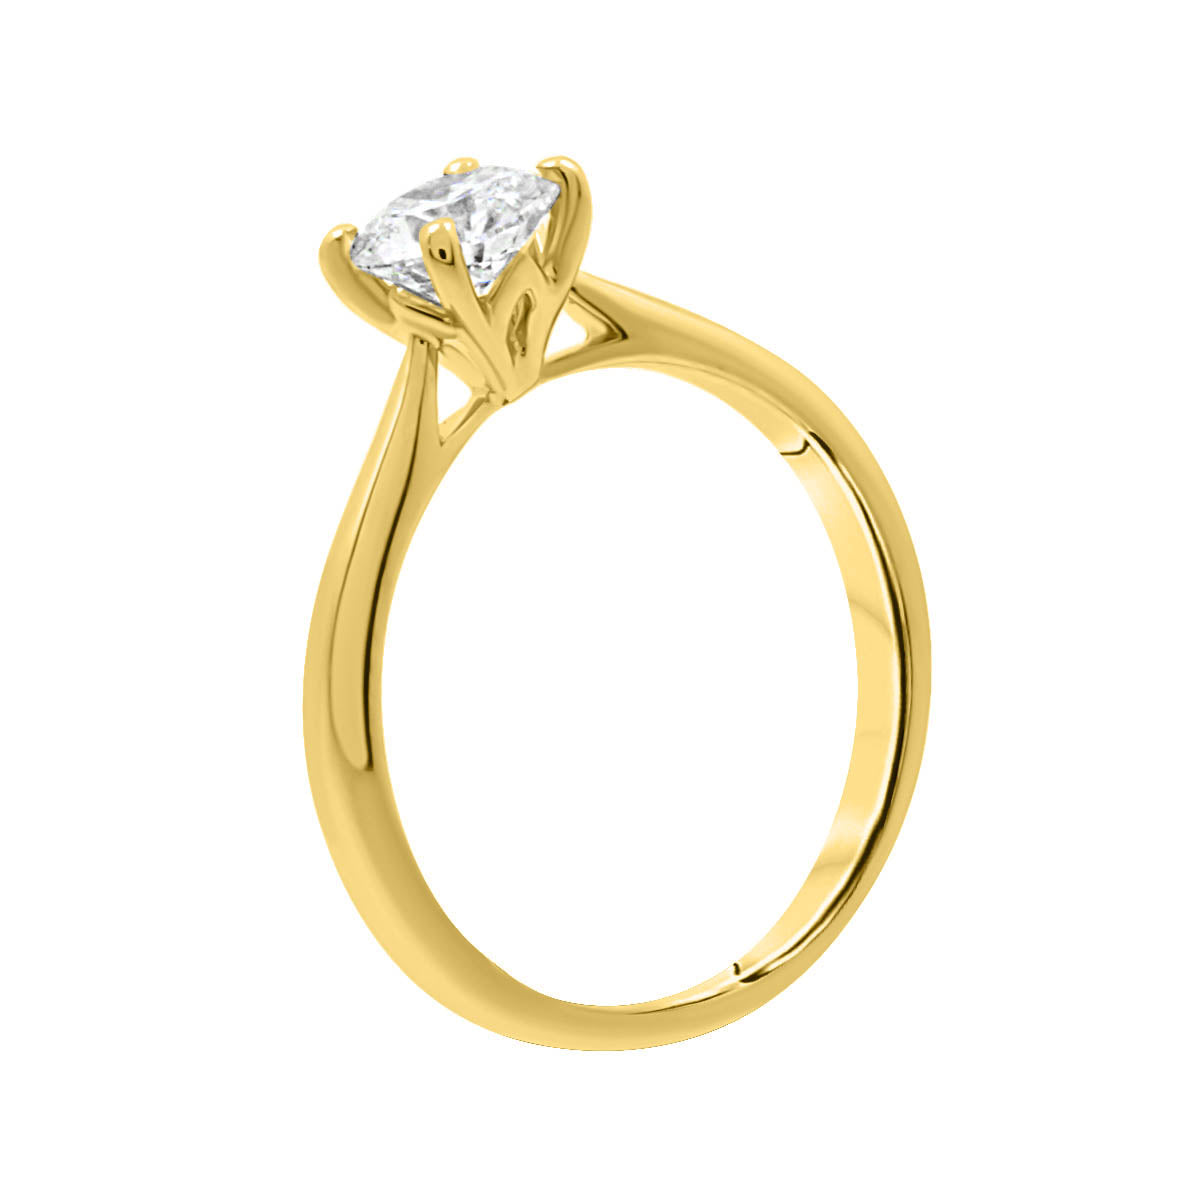 Hidden Diamond Detail engagement ring in 18kt yellow gold